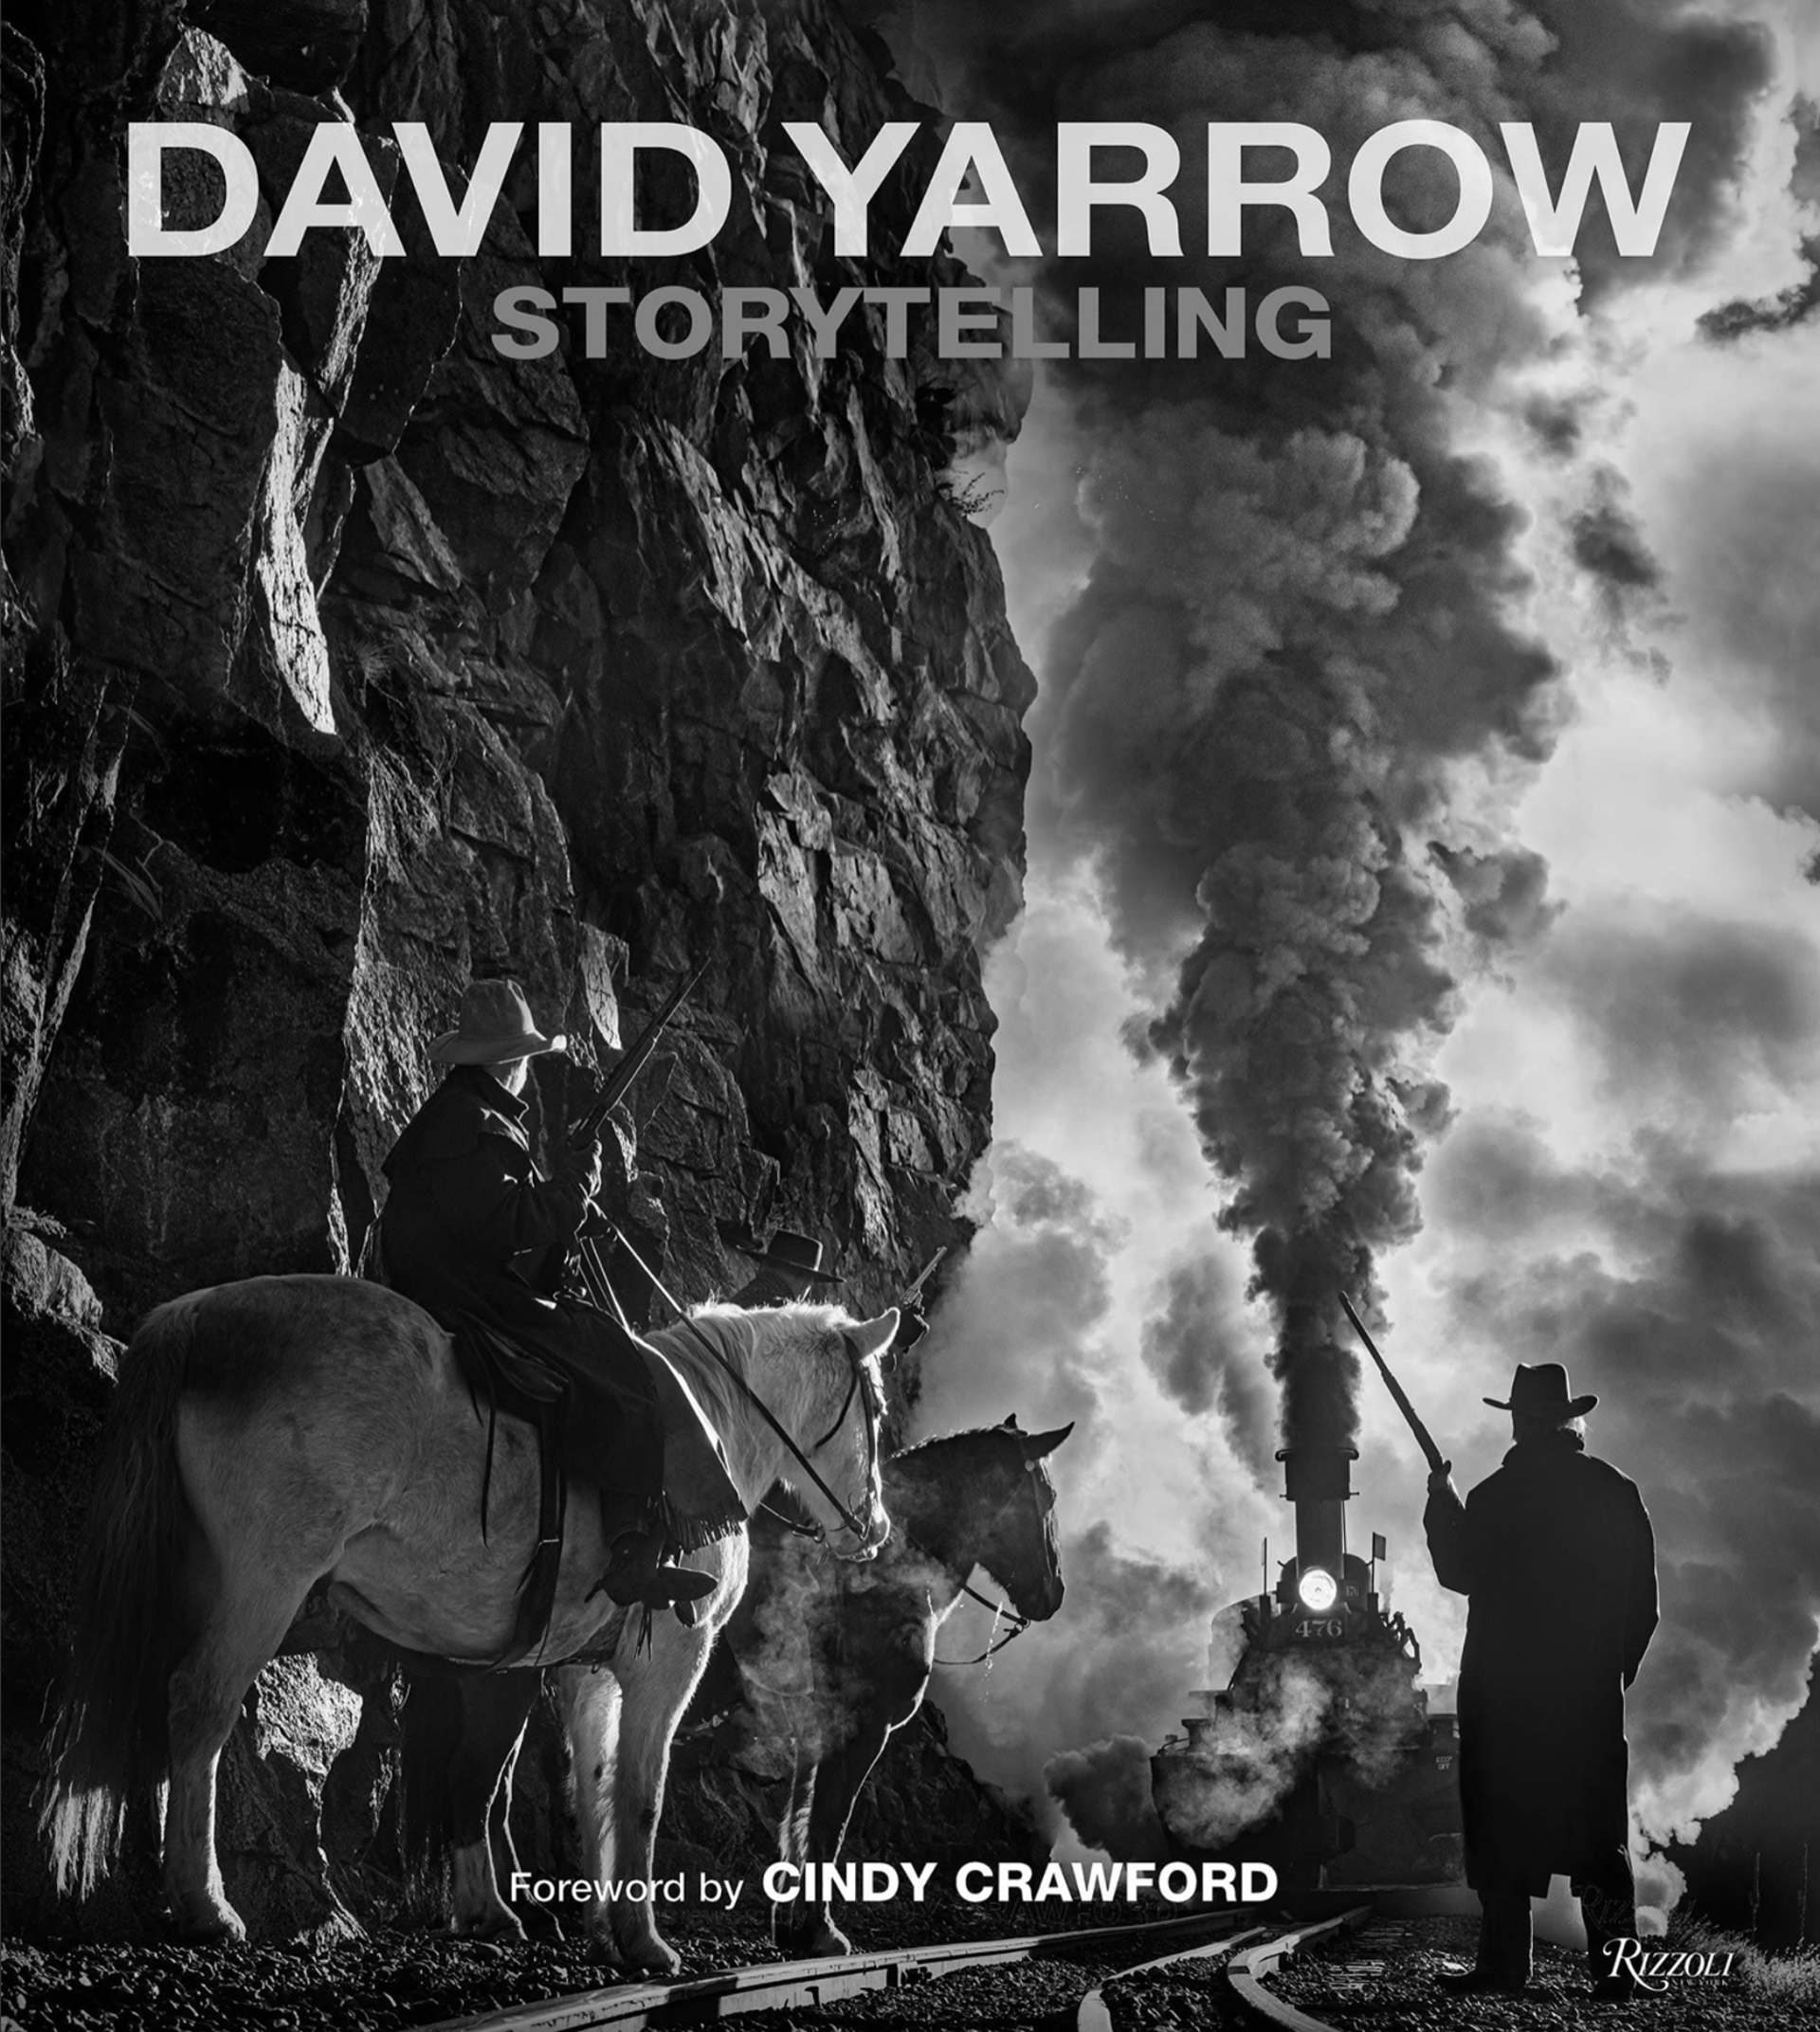 David Yarrow Book "Storytelling" by David Yarrow